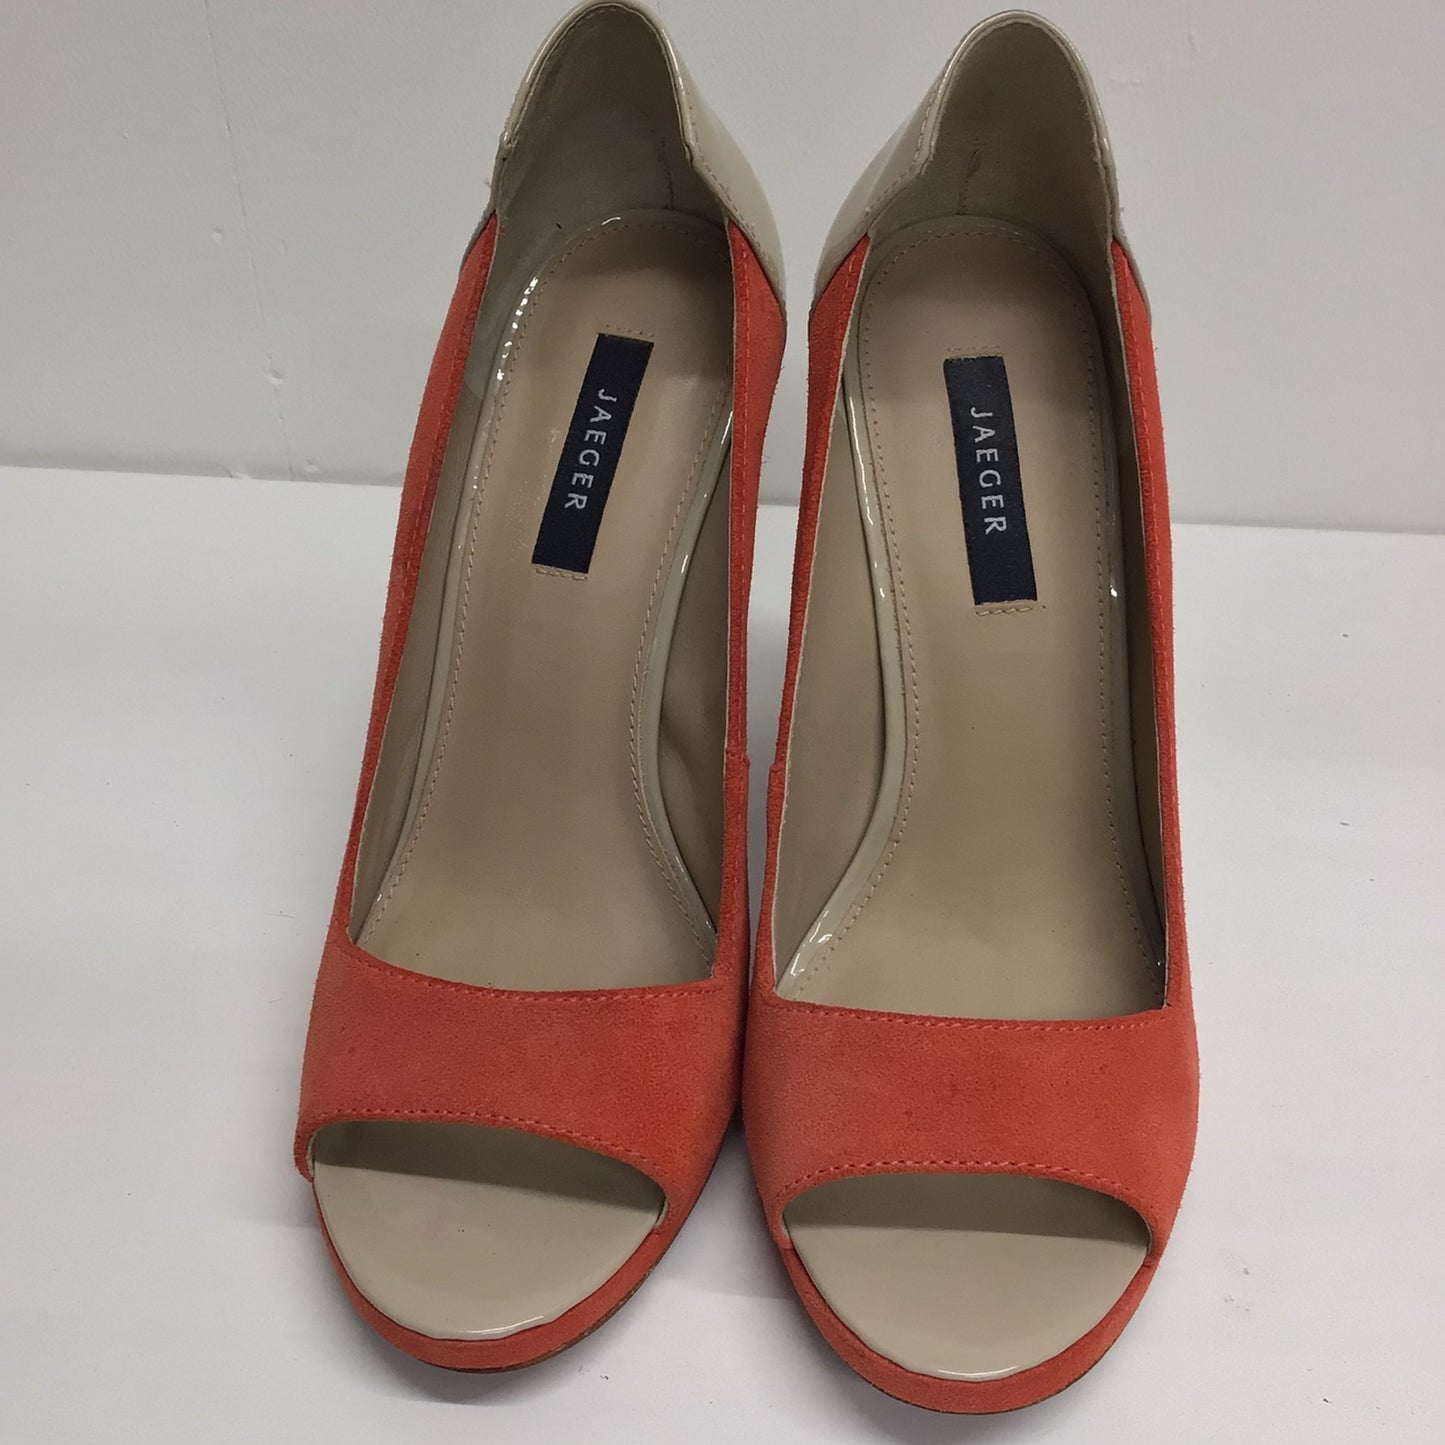 Jaeger Orange & Beige Leather Peep Toe High Heel Court Shoes RRP £170 Size UK 6